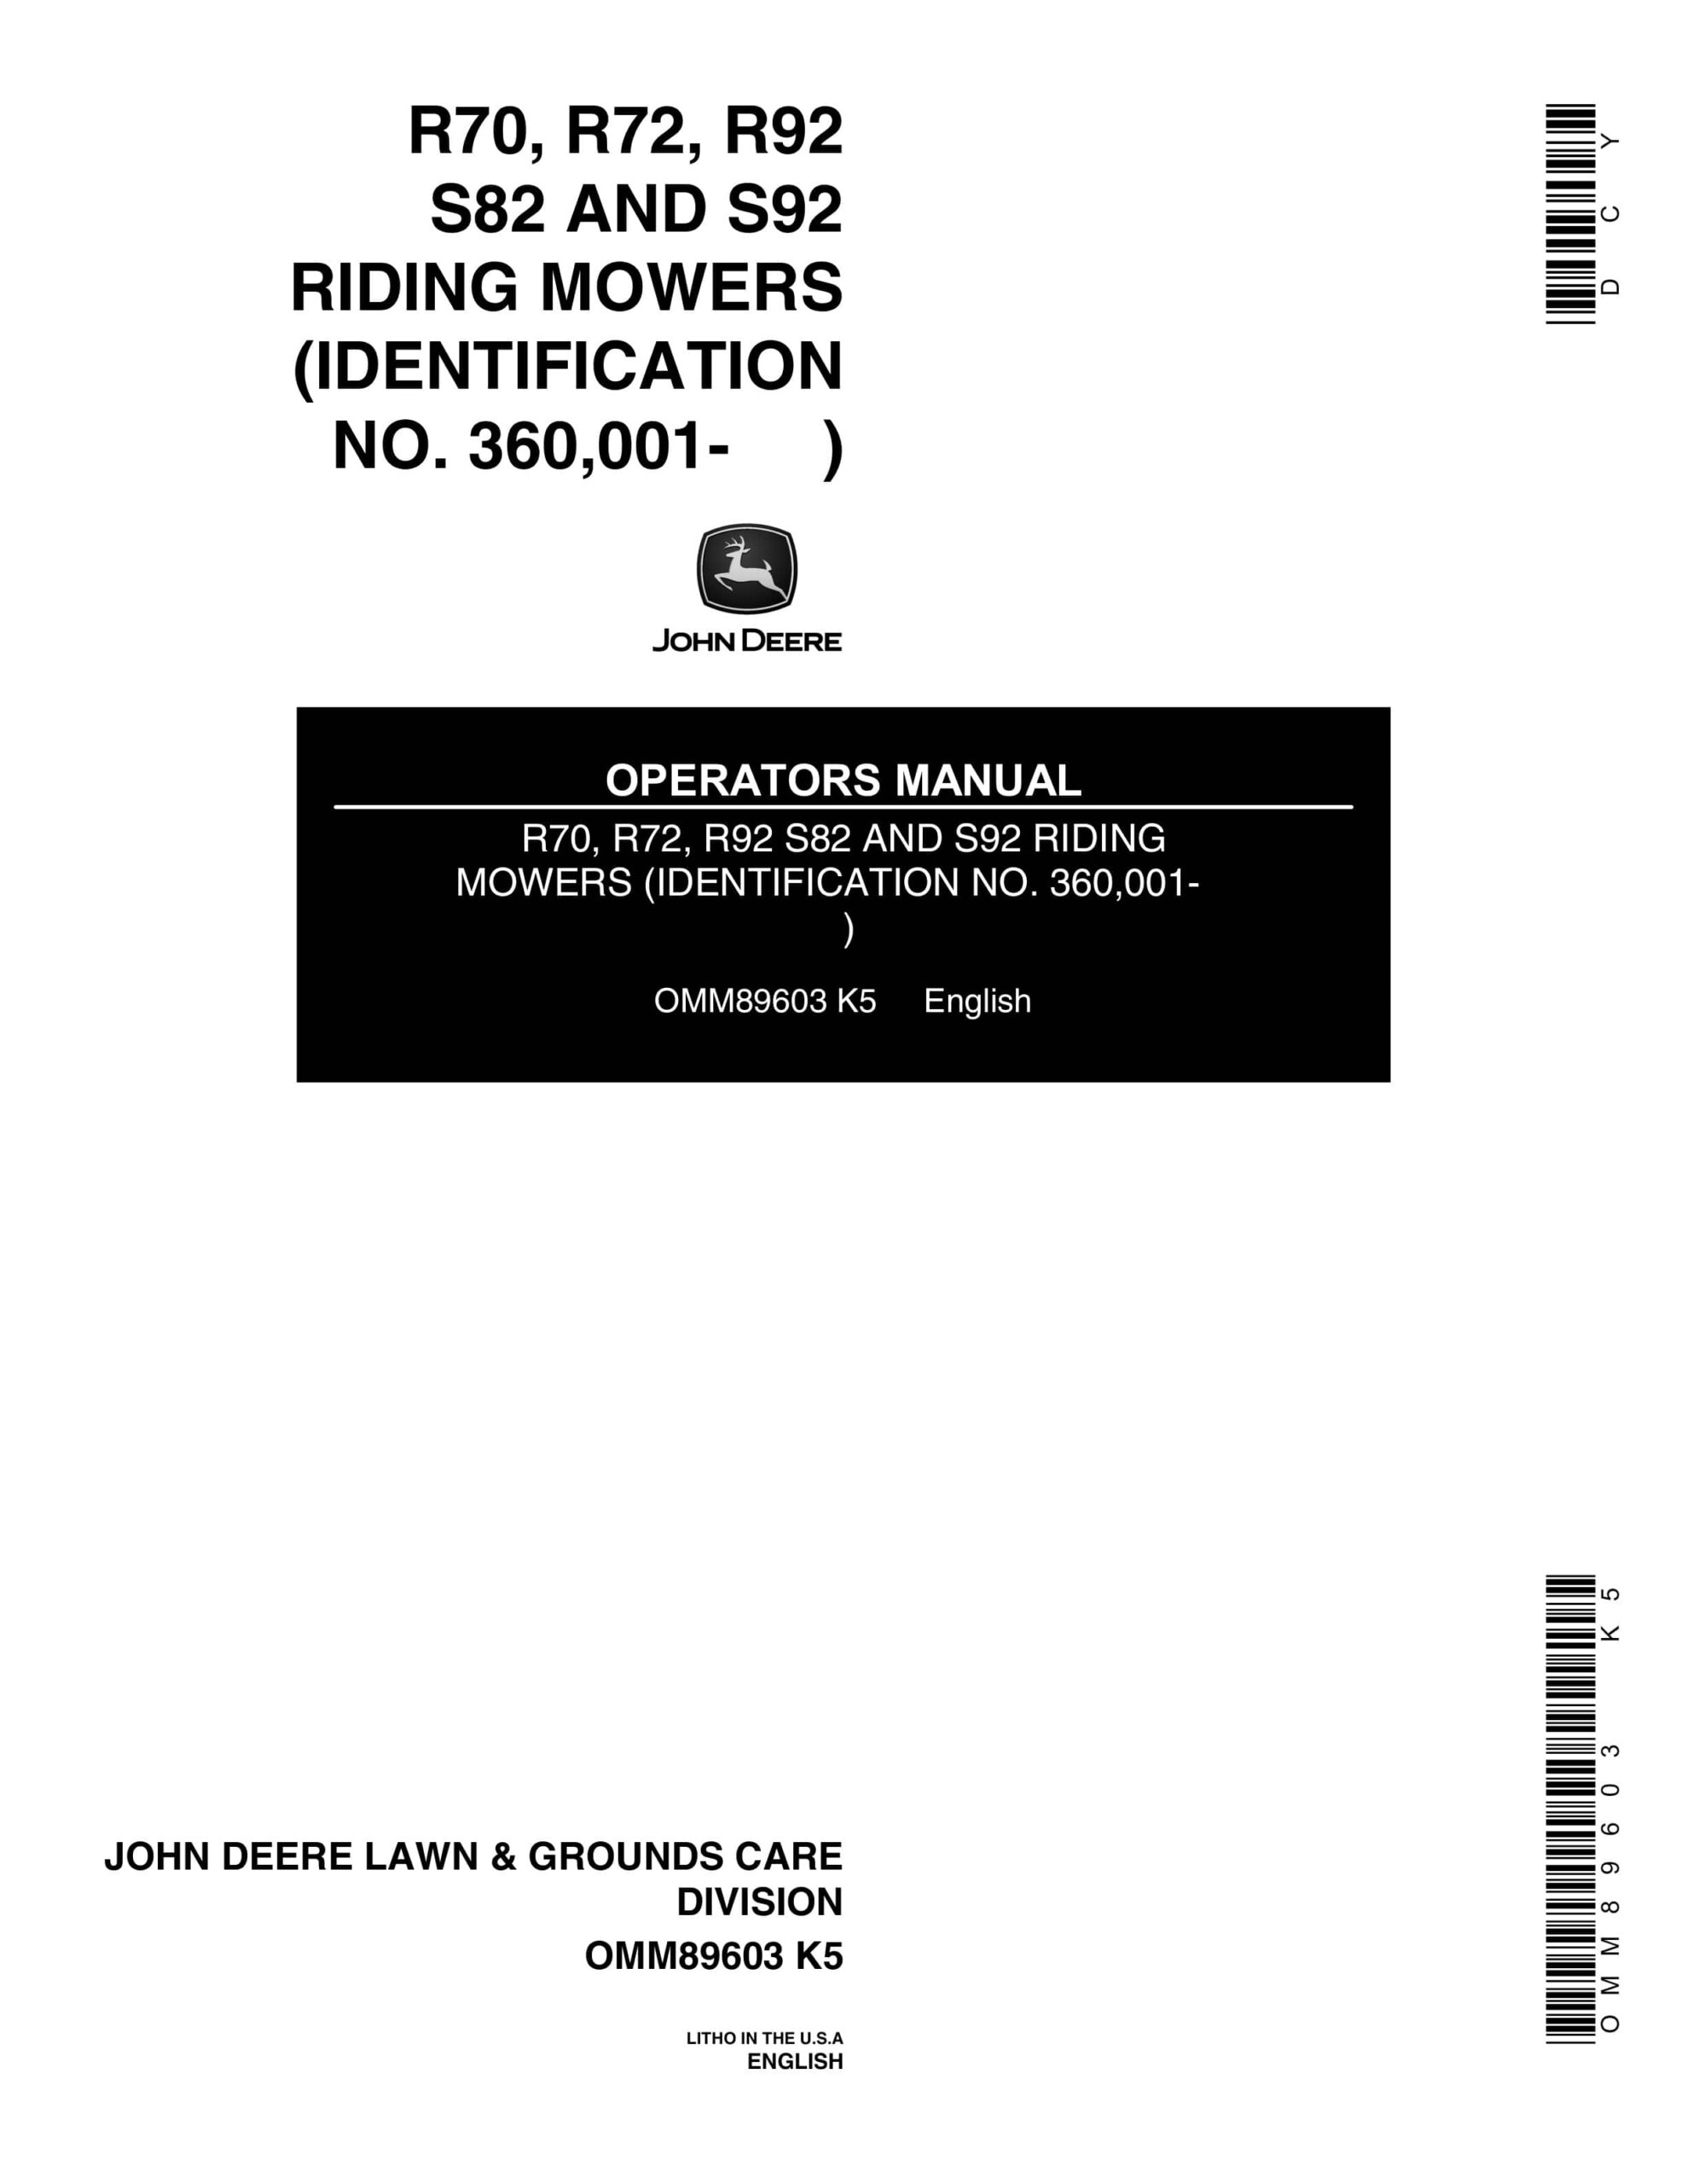 John Deere R70, R72, R92 S82 AND S92 RIDING MOWERS Operator Manual OMM89603-1